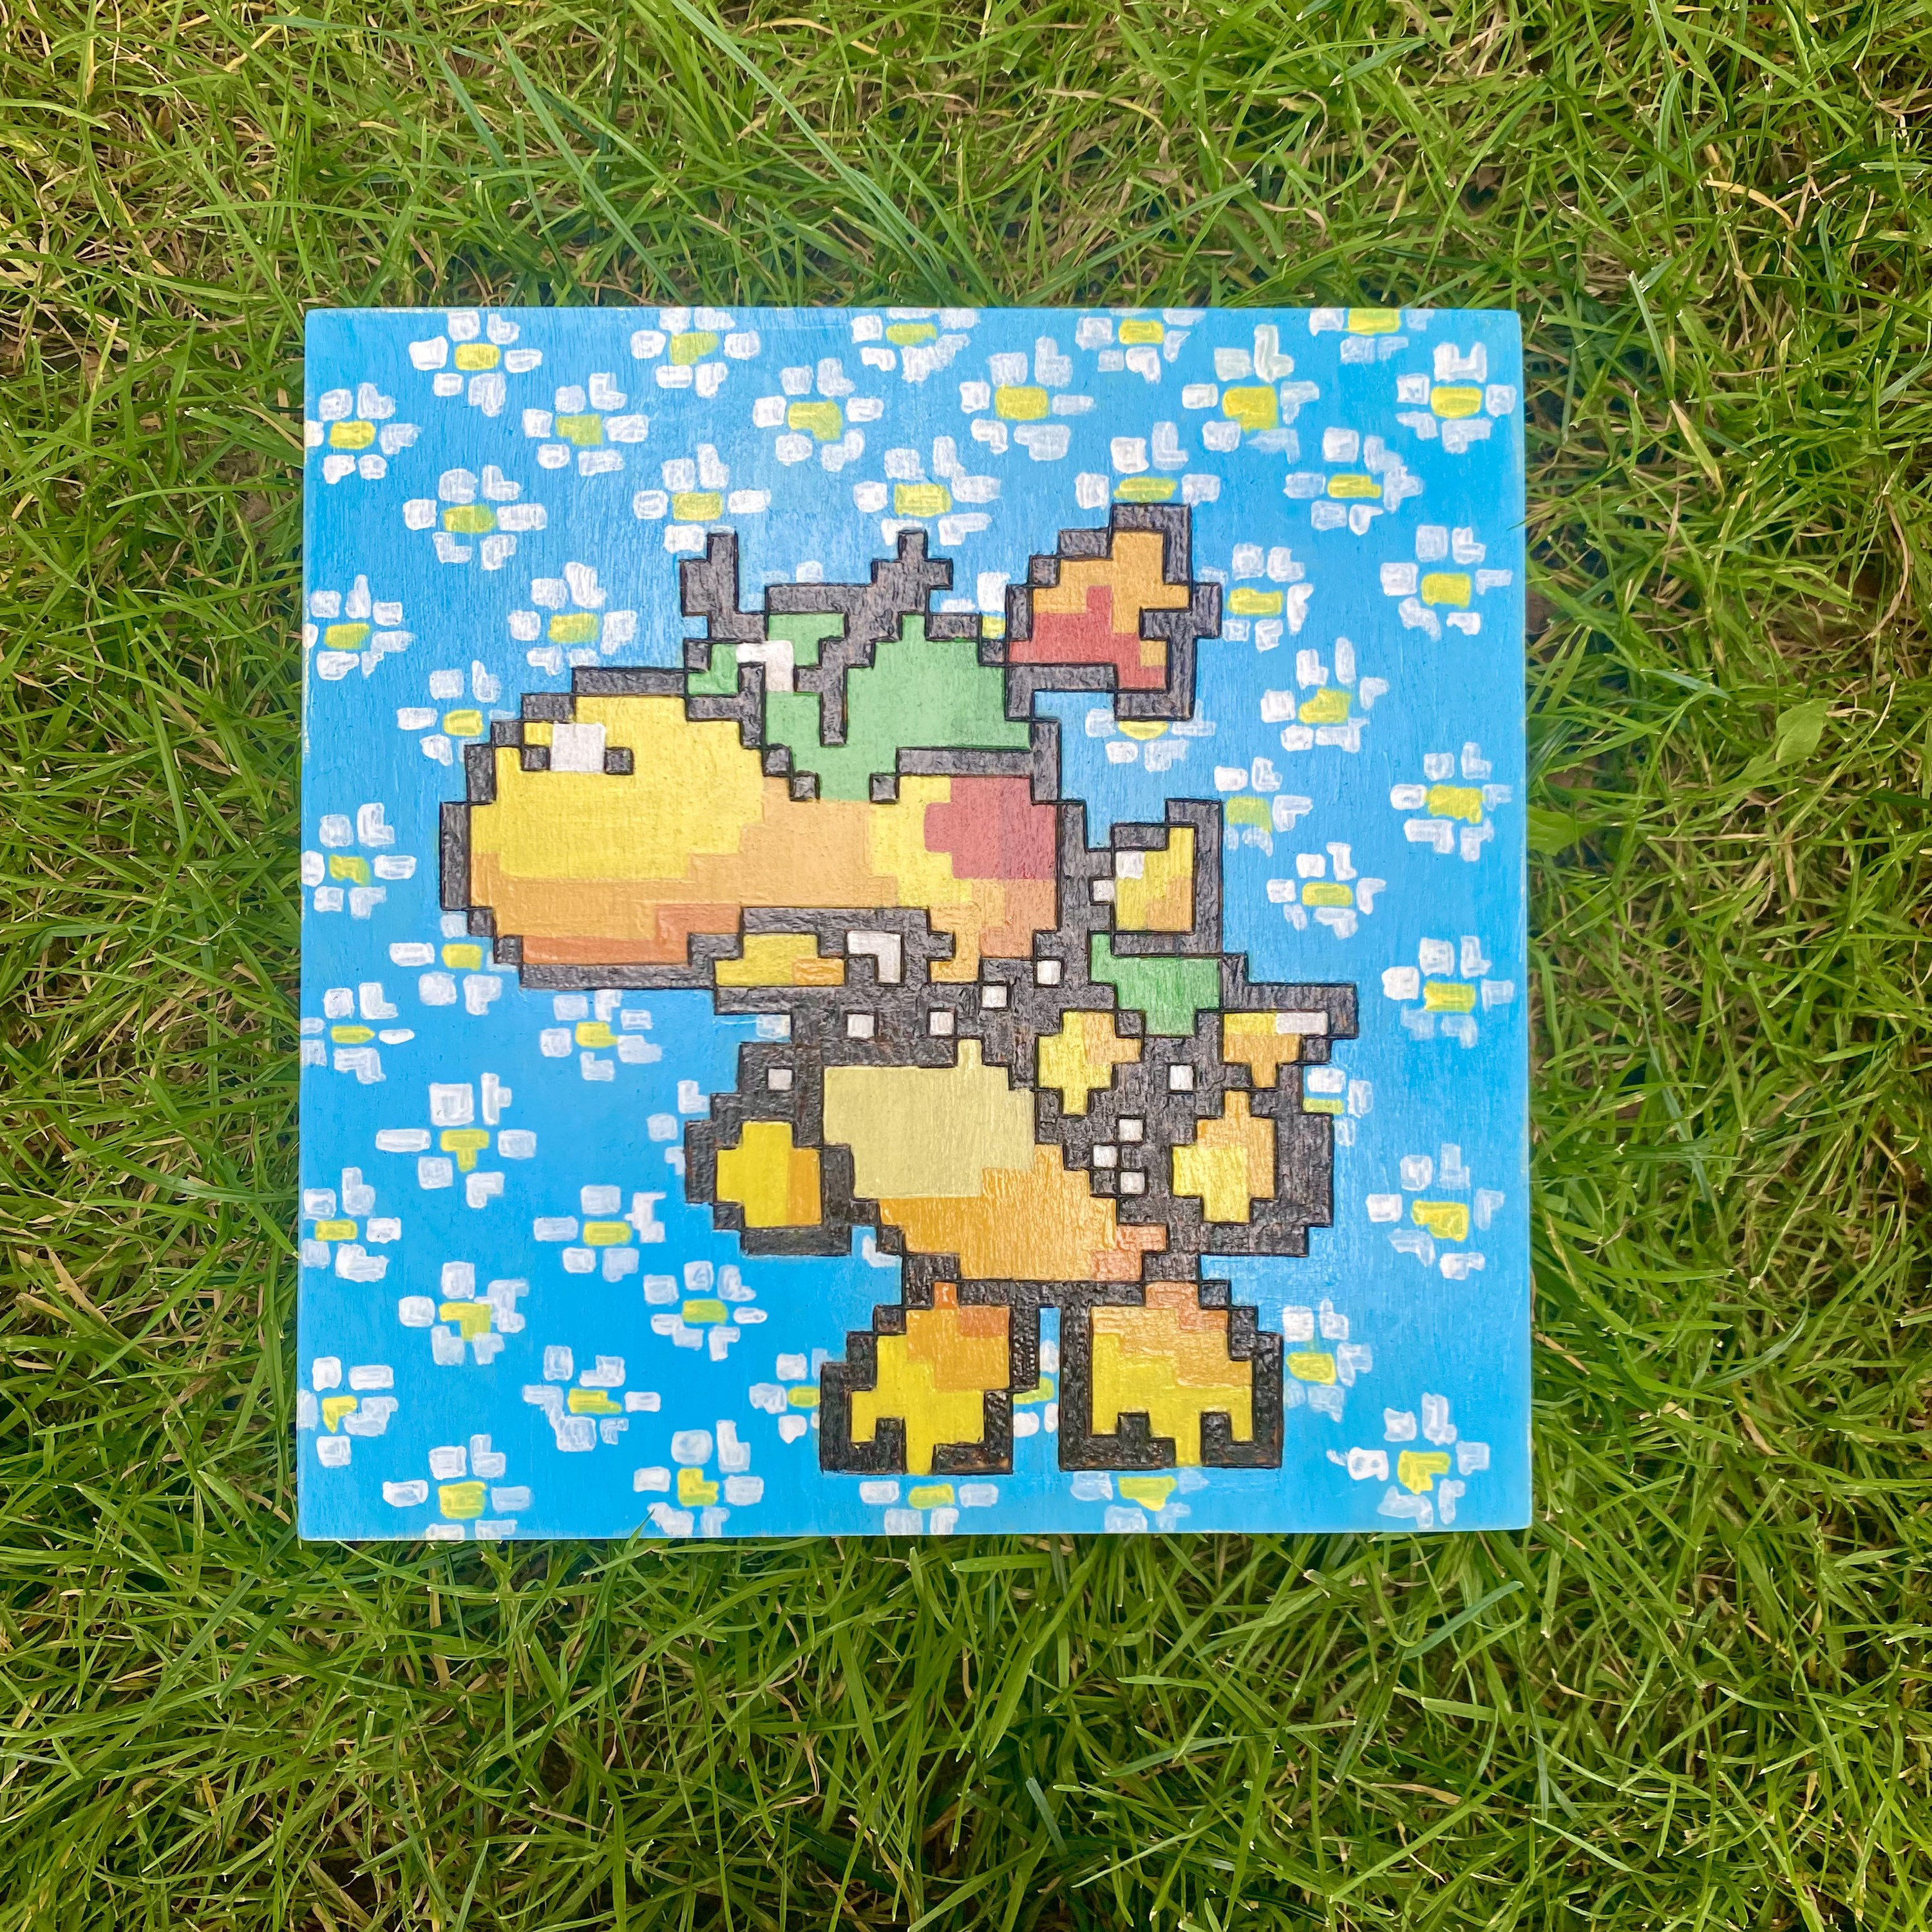 Yoshi - Super Mario World - Figura Pixel Art - Bitxelados - Bonecos -  Magazine Luiza